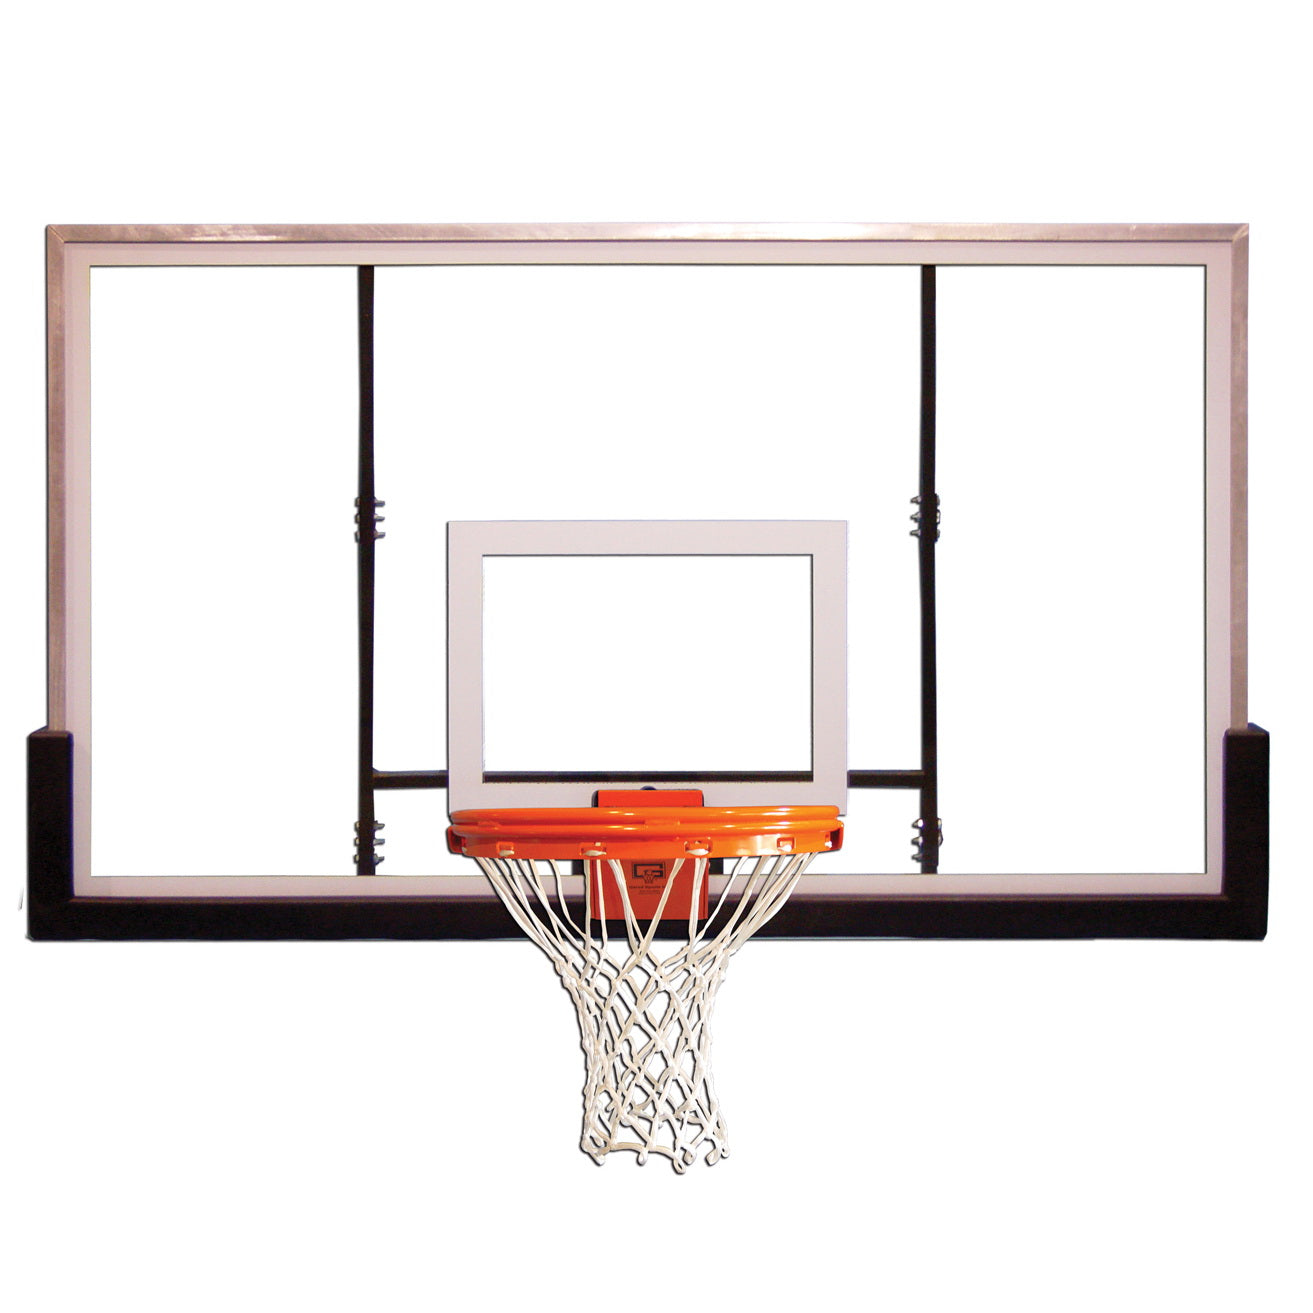 Gared Outdoor Recreational Full Sized Glass Basketball Backboard